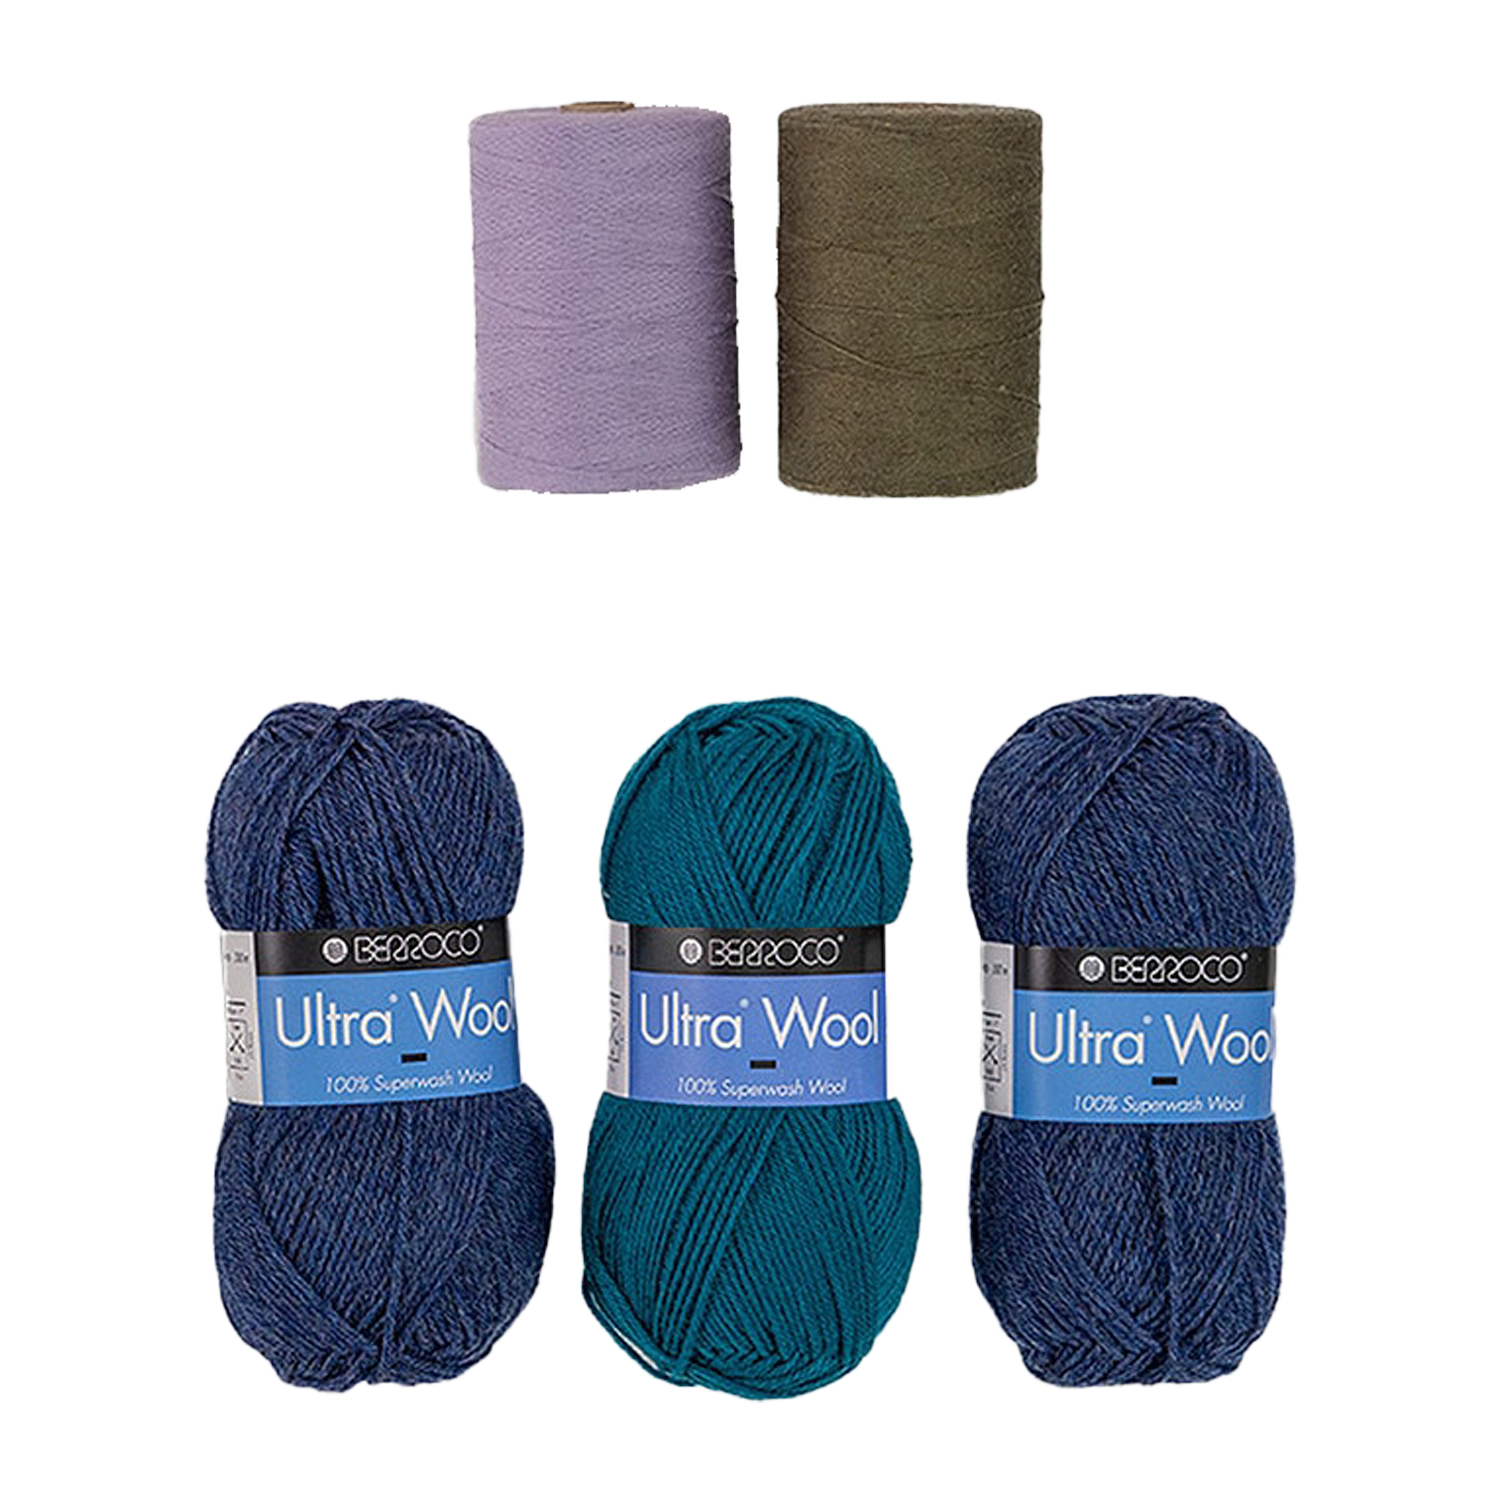 Beginning 4 Shaft Weaving for Everyone Yarn Kit